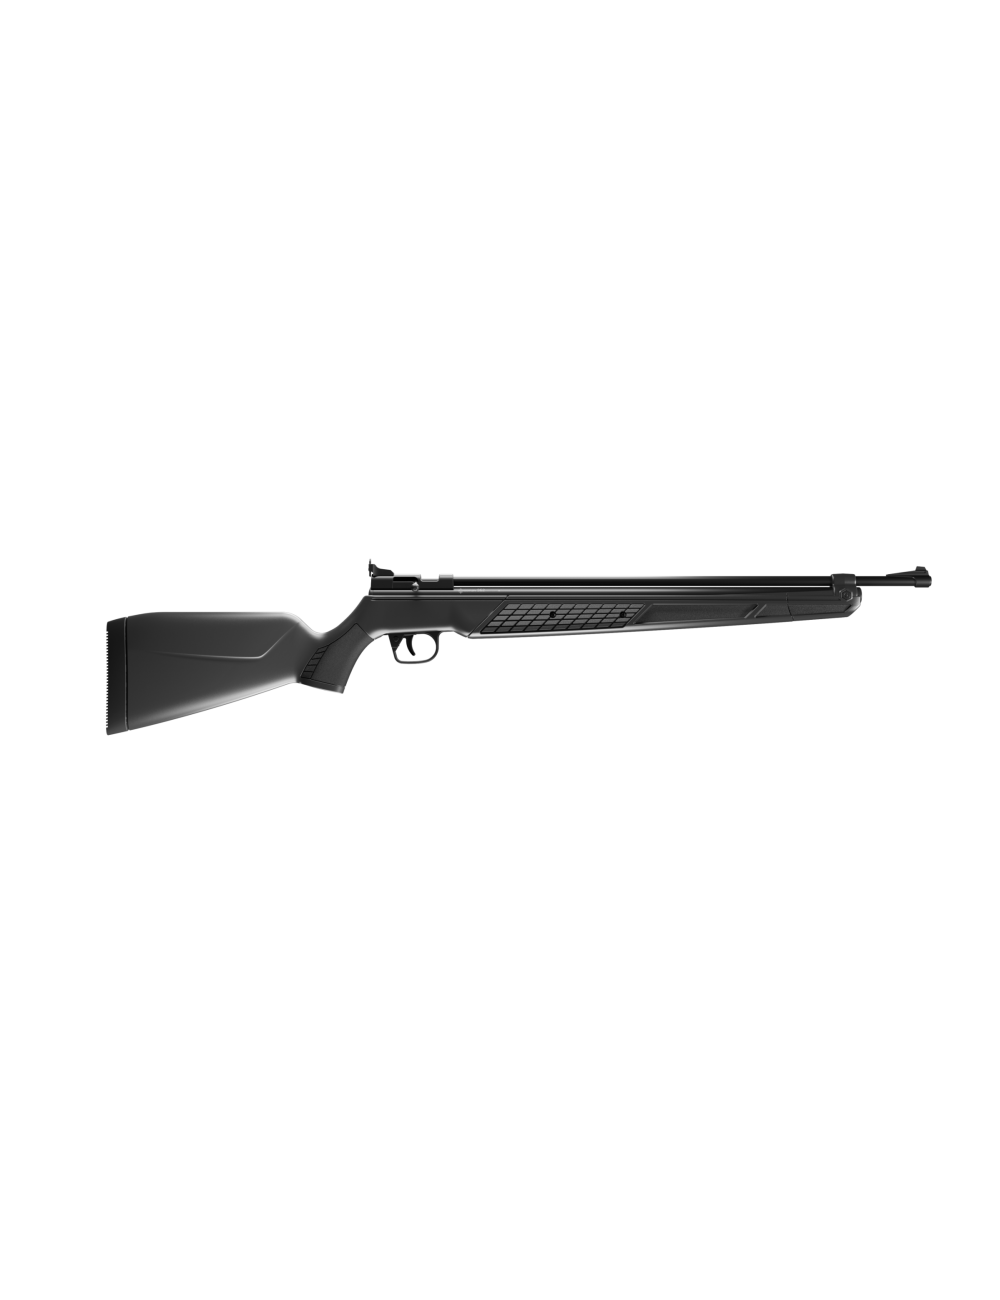 Carabina Bombeo Pump Action Crosman Remington 1100, Comprar online